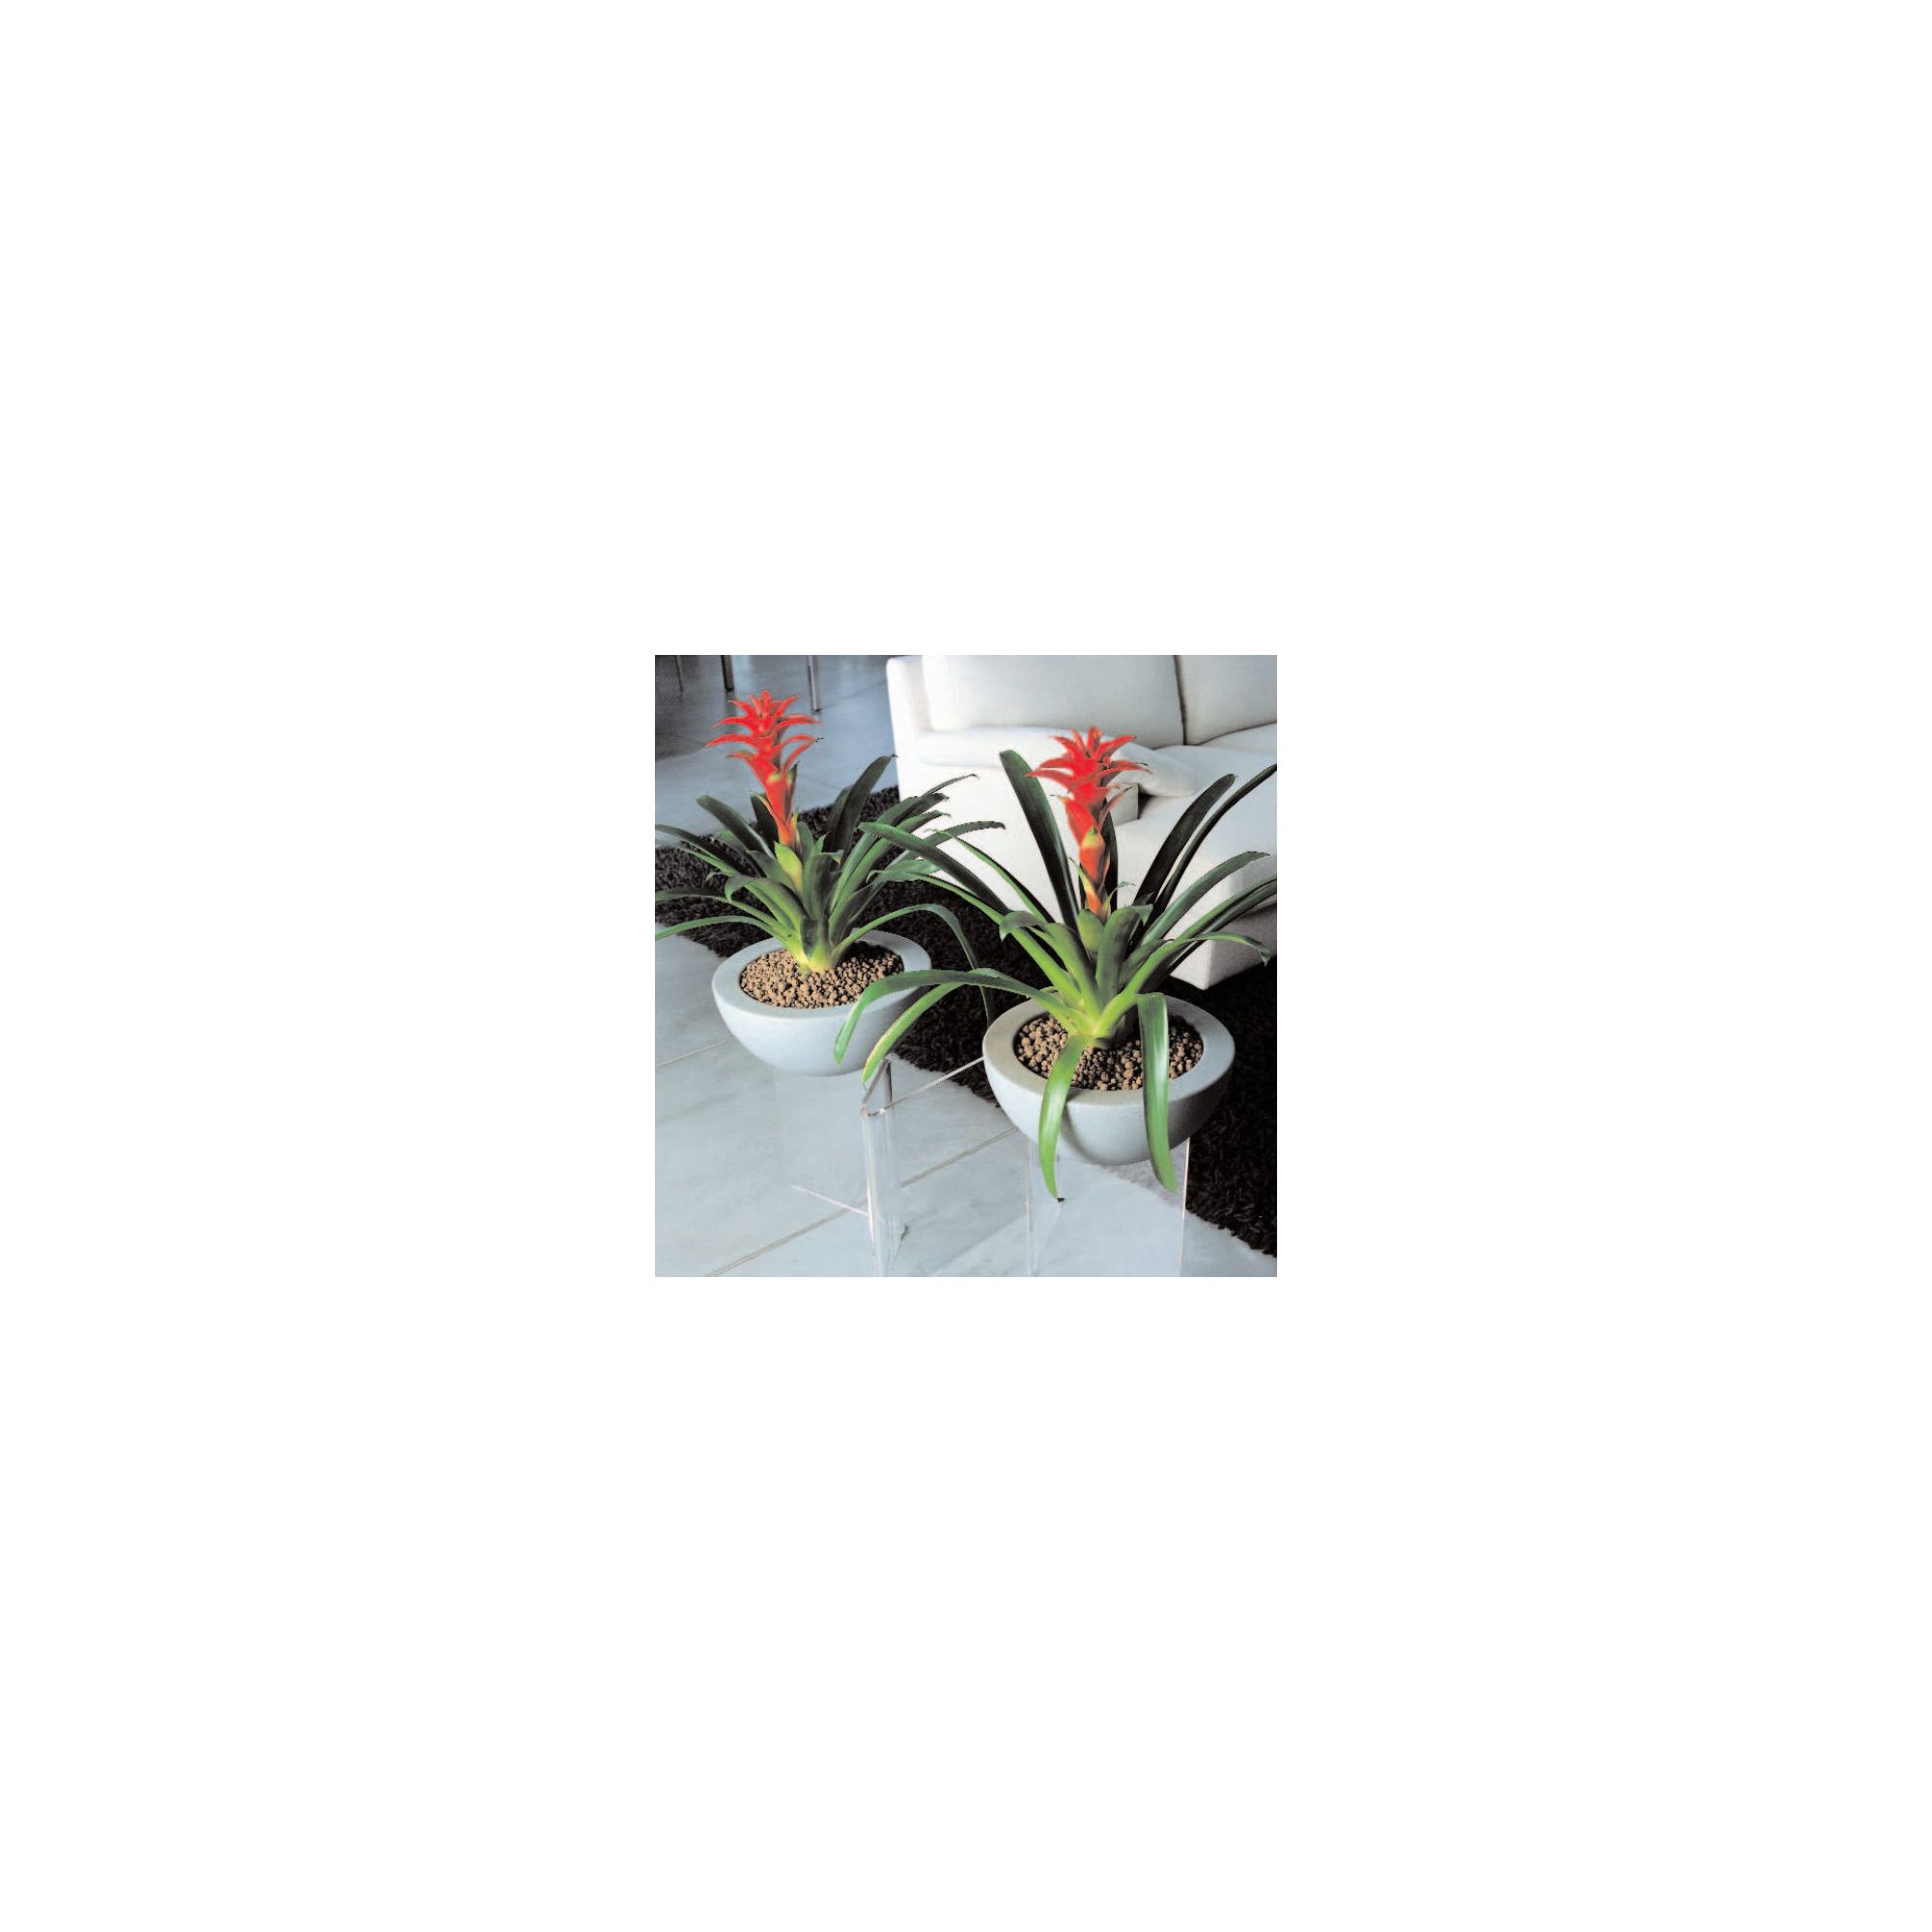 Emporium Positive Design Eebavoglio Double Flower Tray - Grey at Tesco Direct